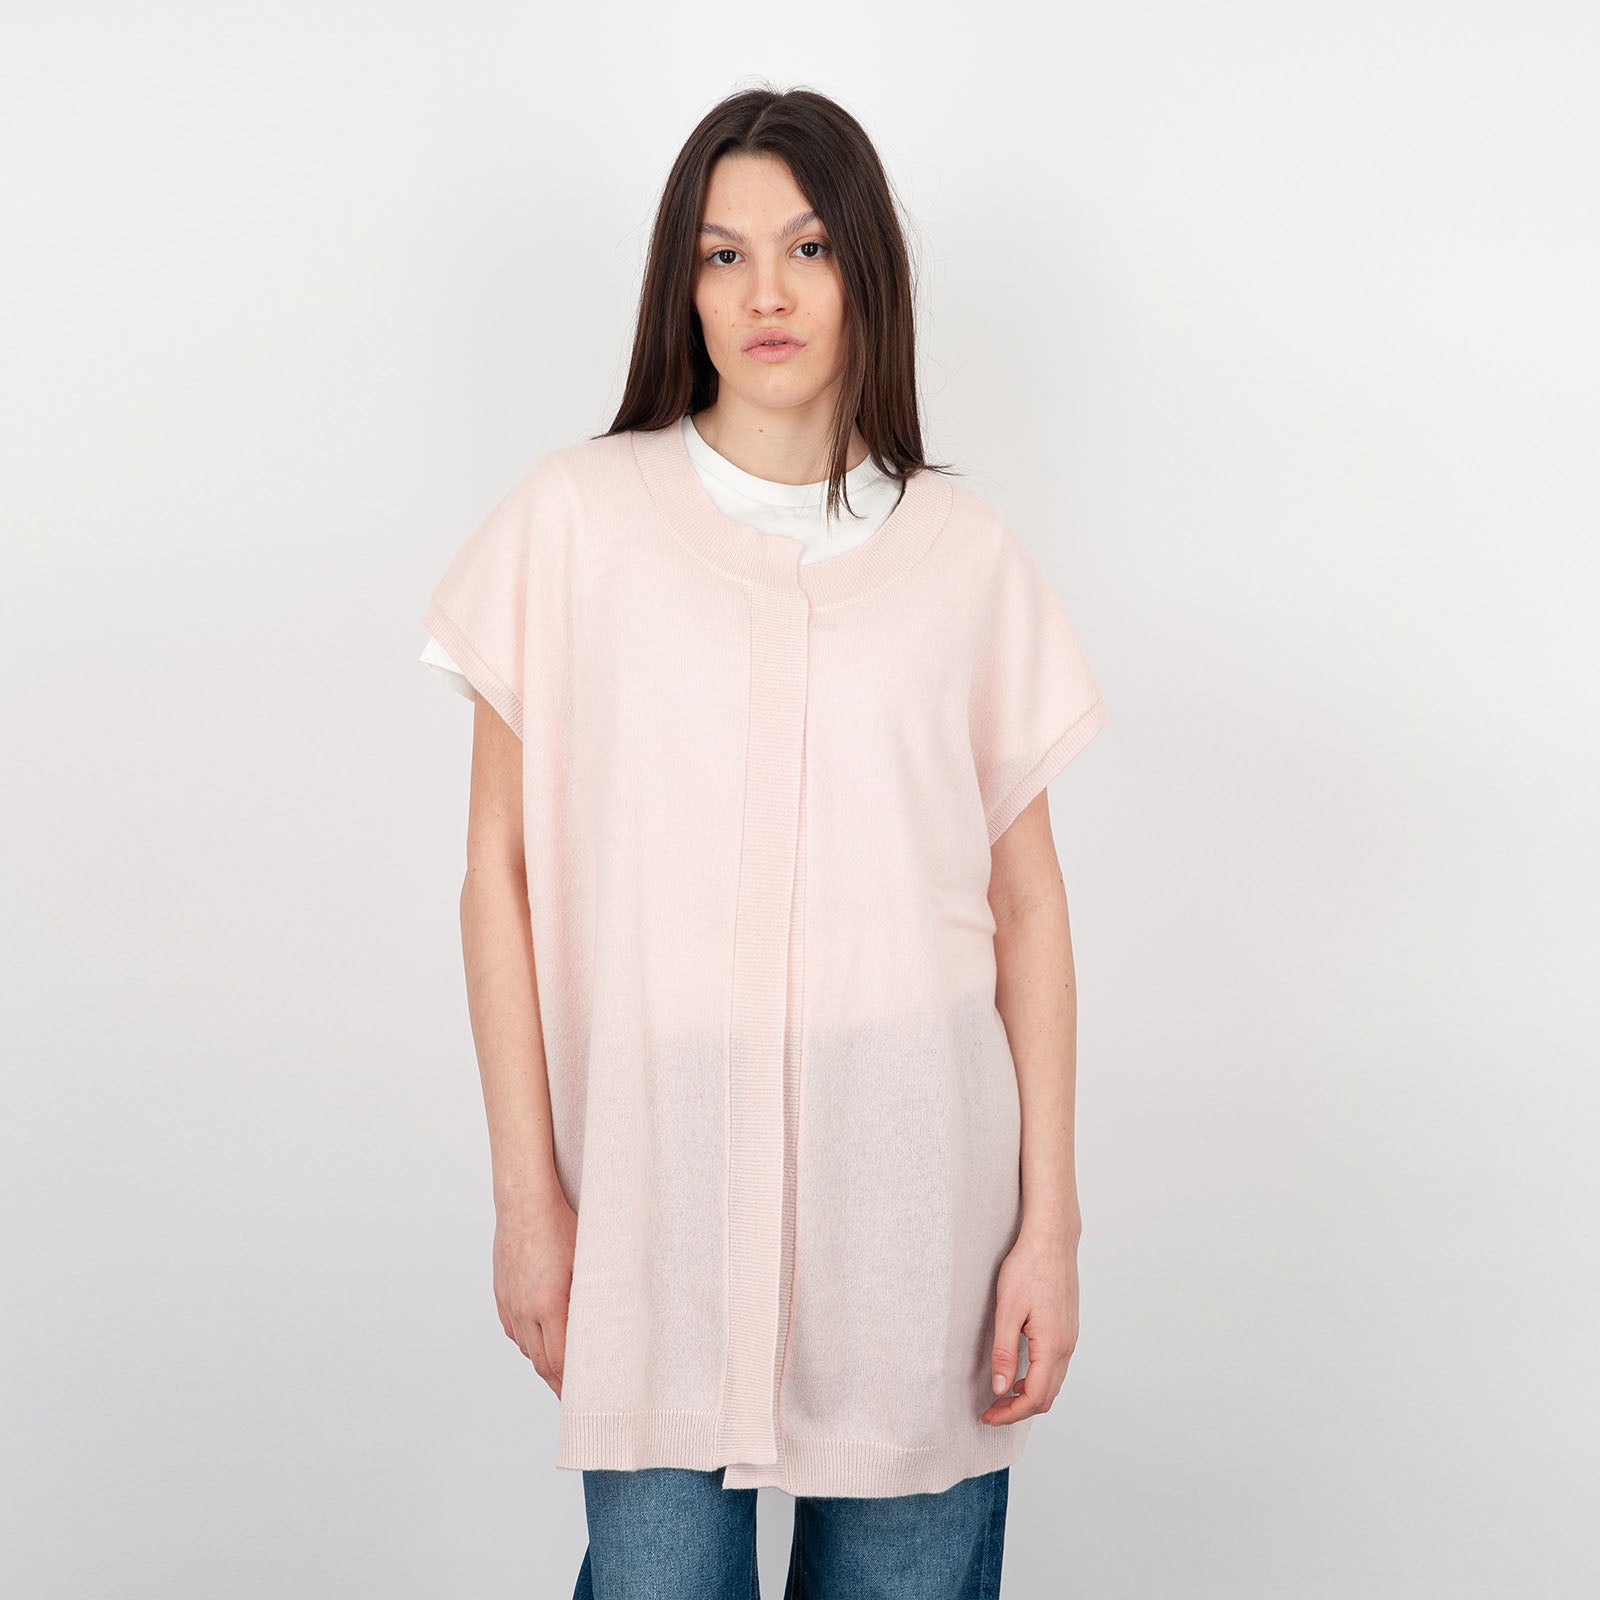 Absolut Cashmere Diana Light Pink Wool Cardigan - 6